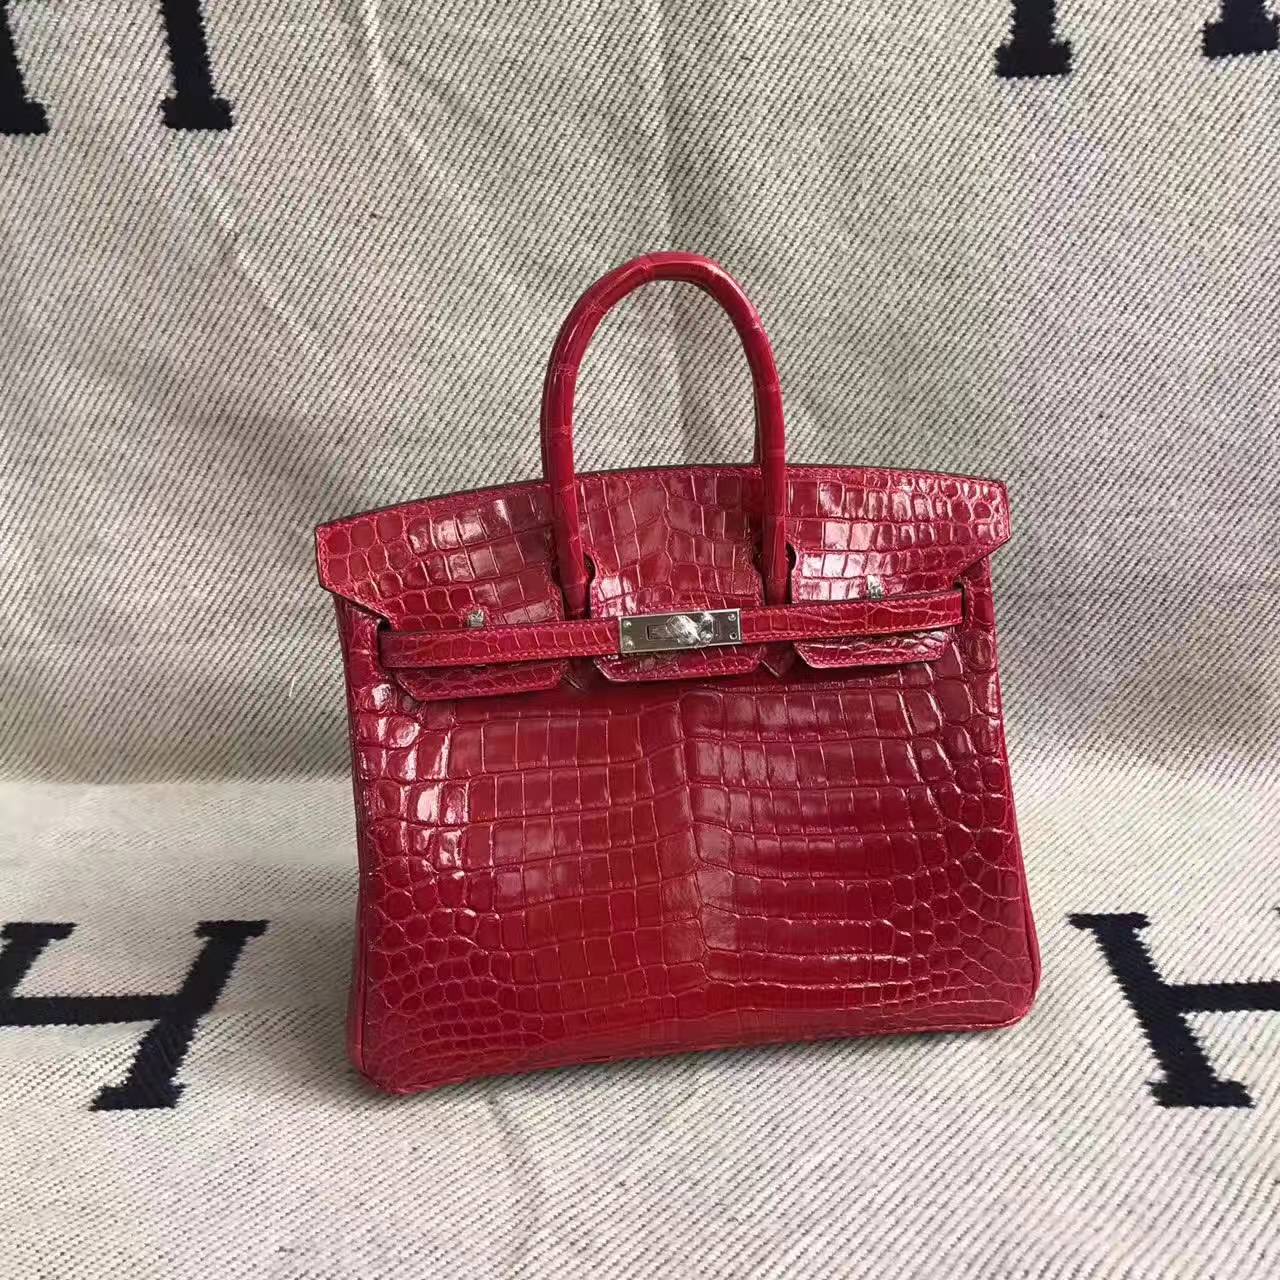 Wholesale Hermes Red Crocodile Shiny Leather Birkin Bag 25cm – HEMA ...